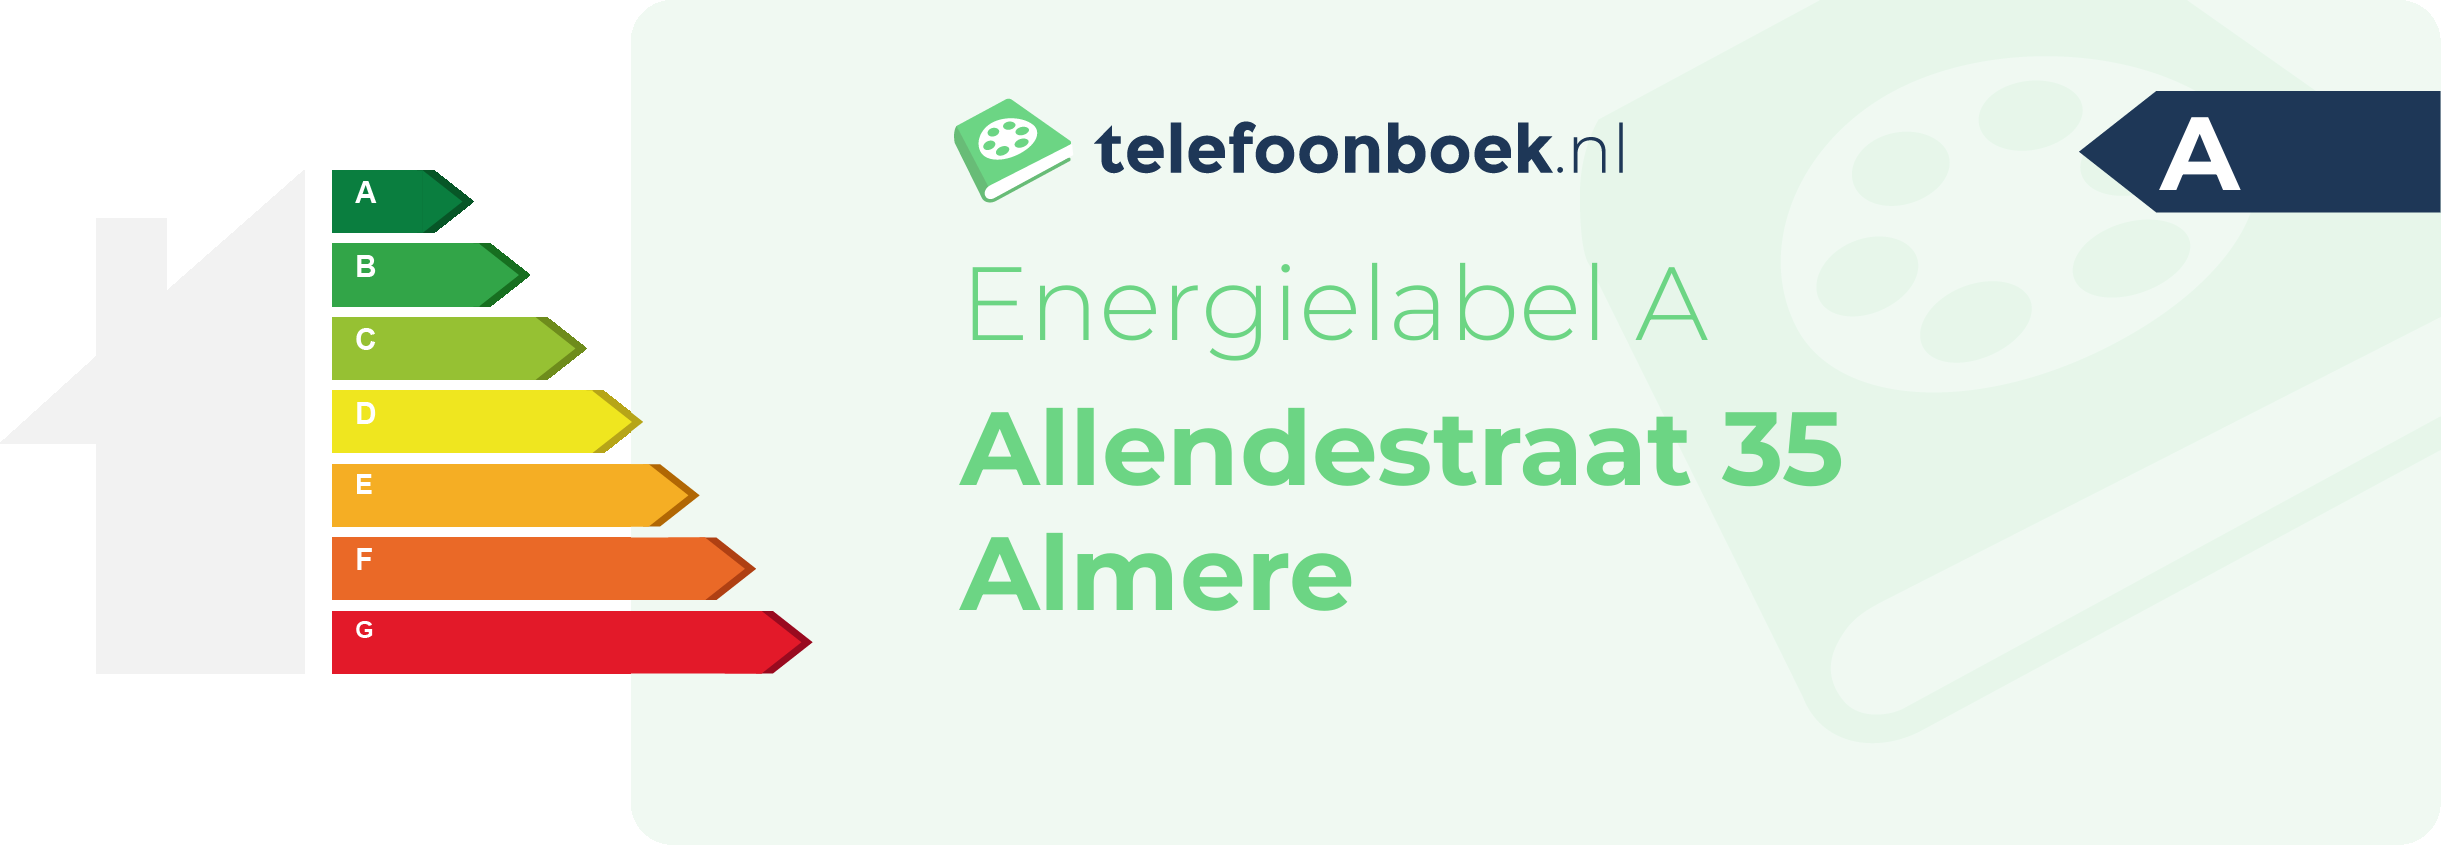 Energielabel Allendestraat 35 Almere